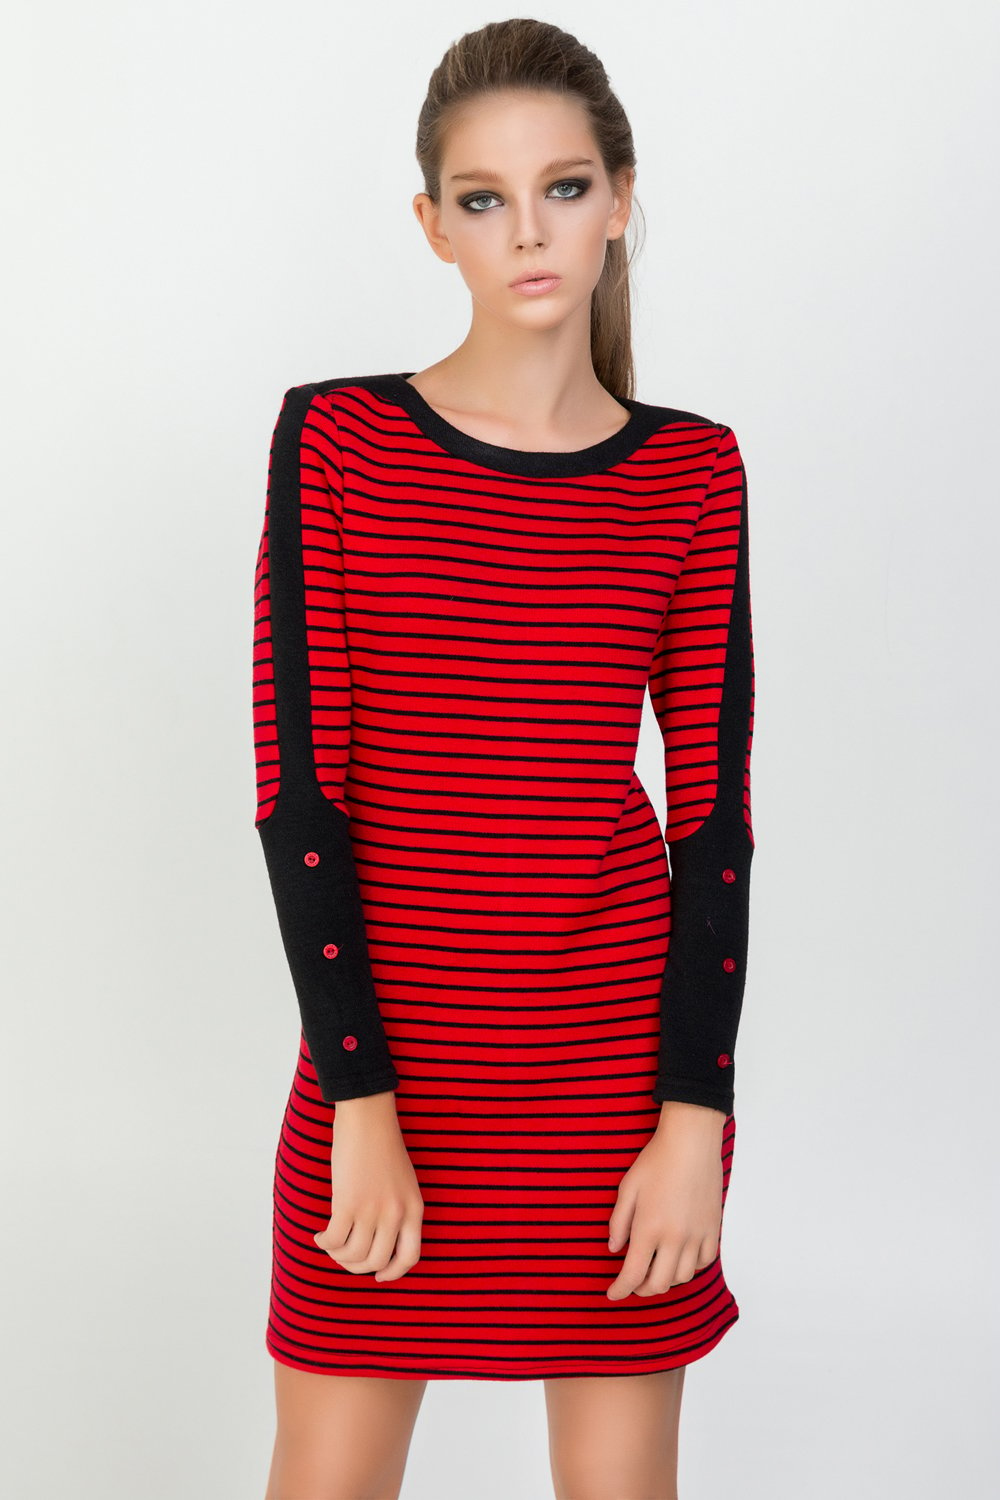 Red striped dress